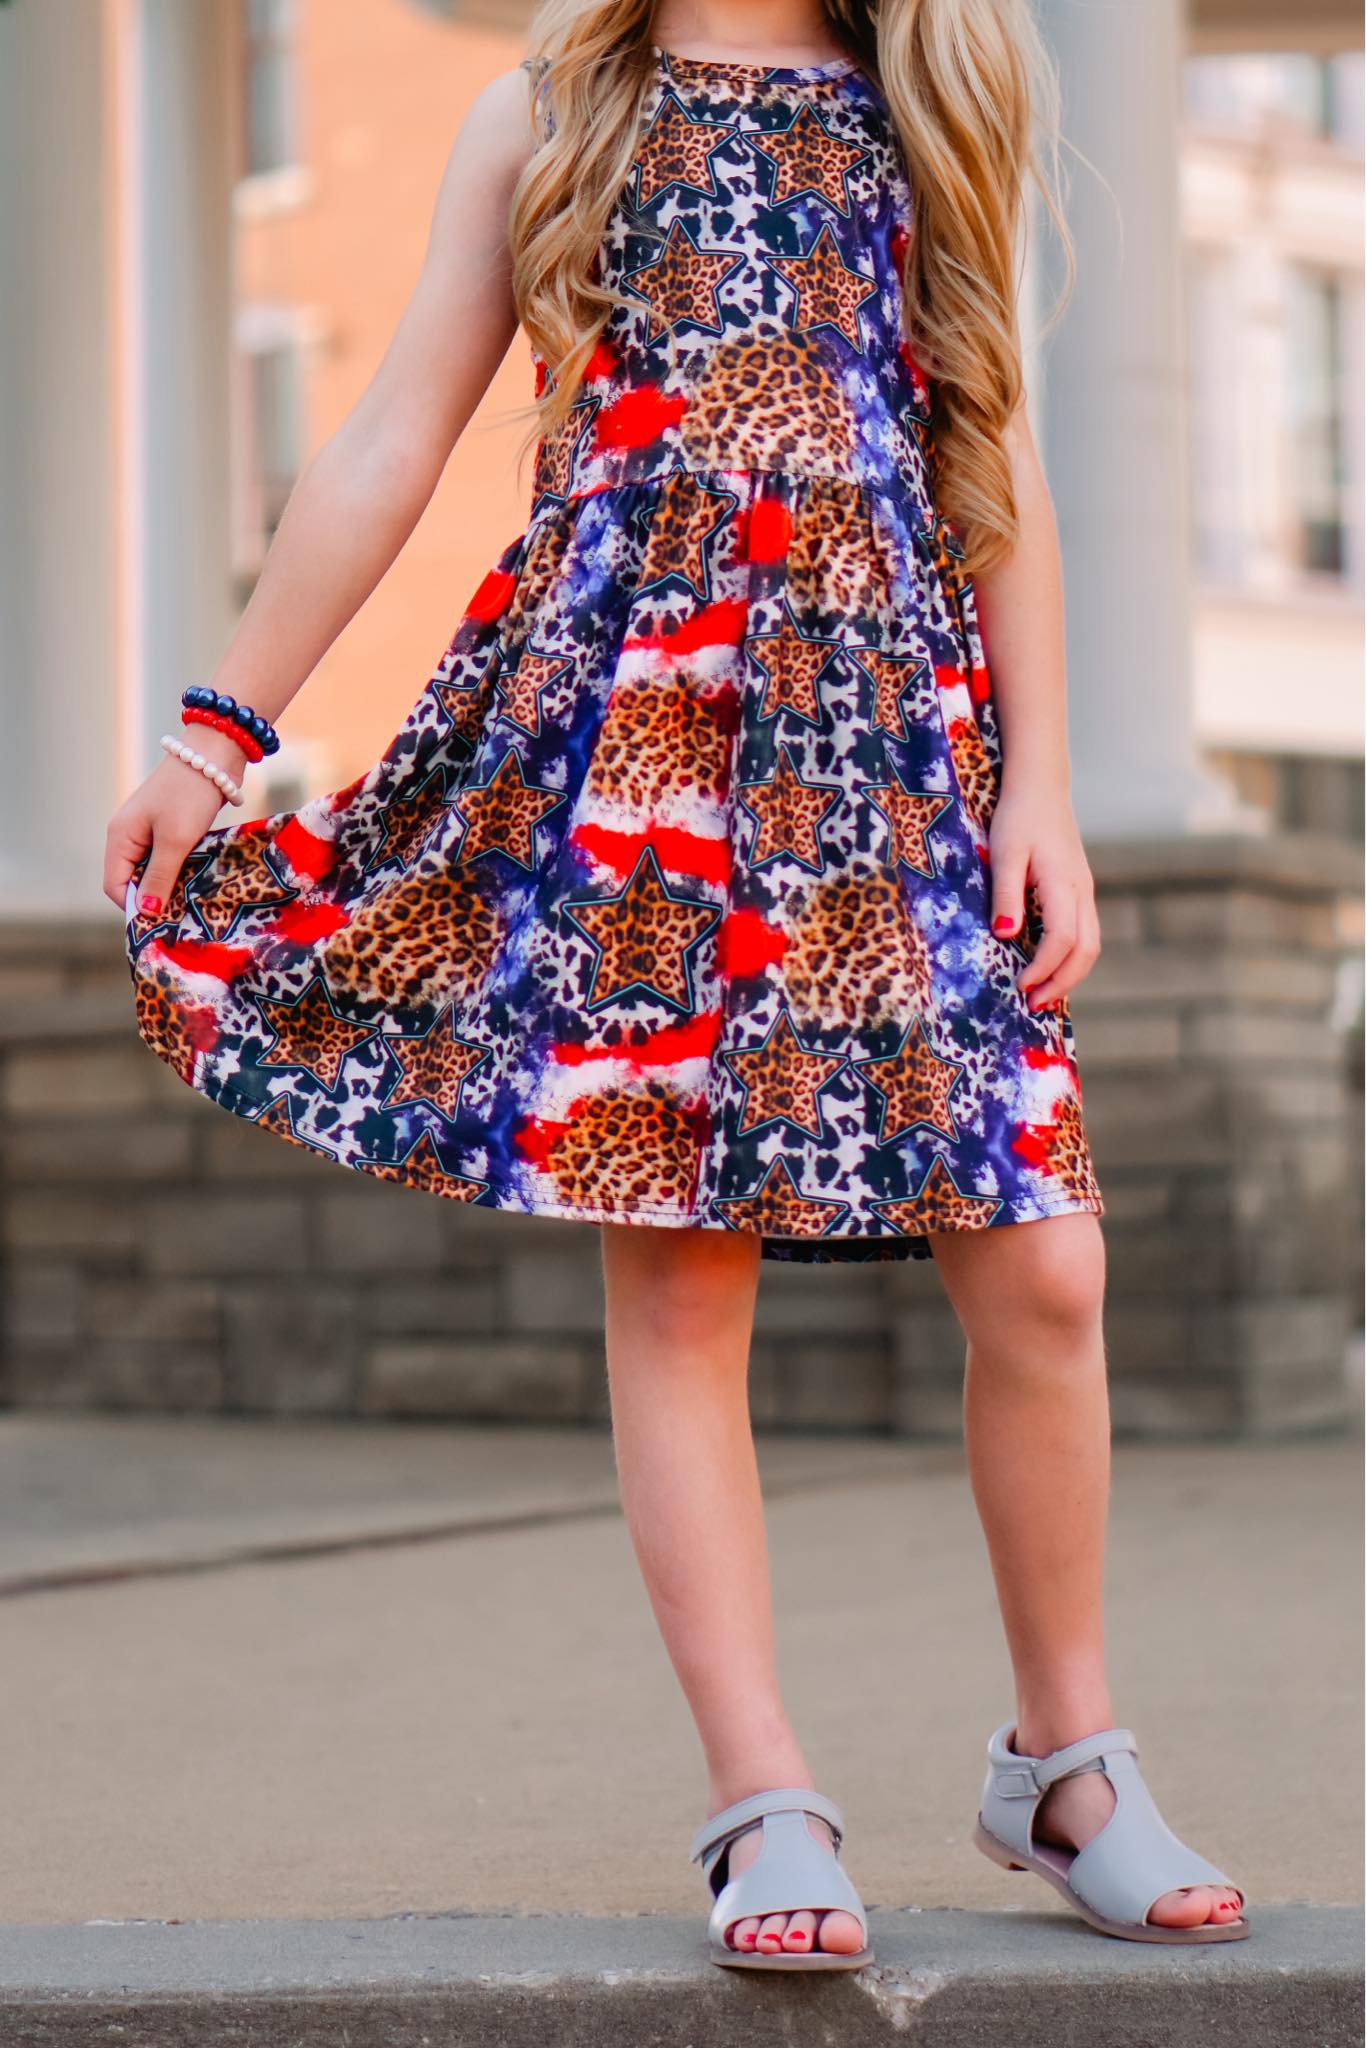 [American Kitty] Dress